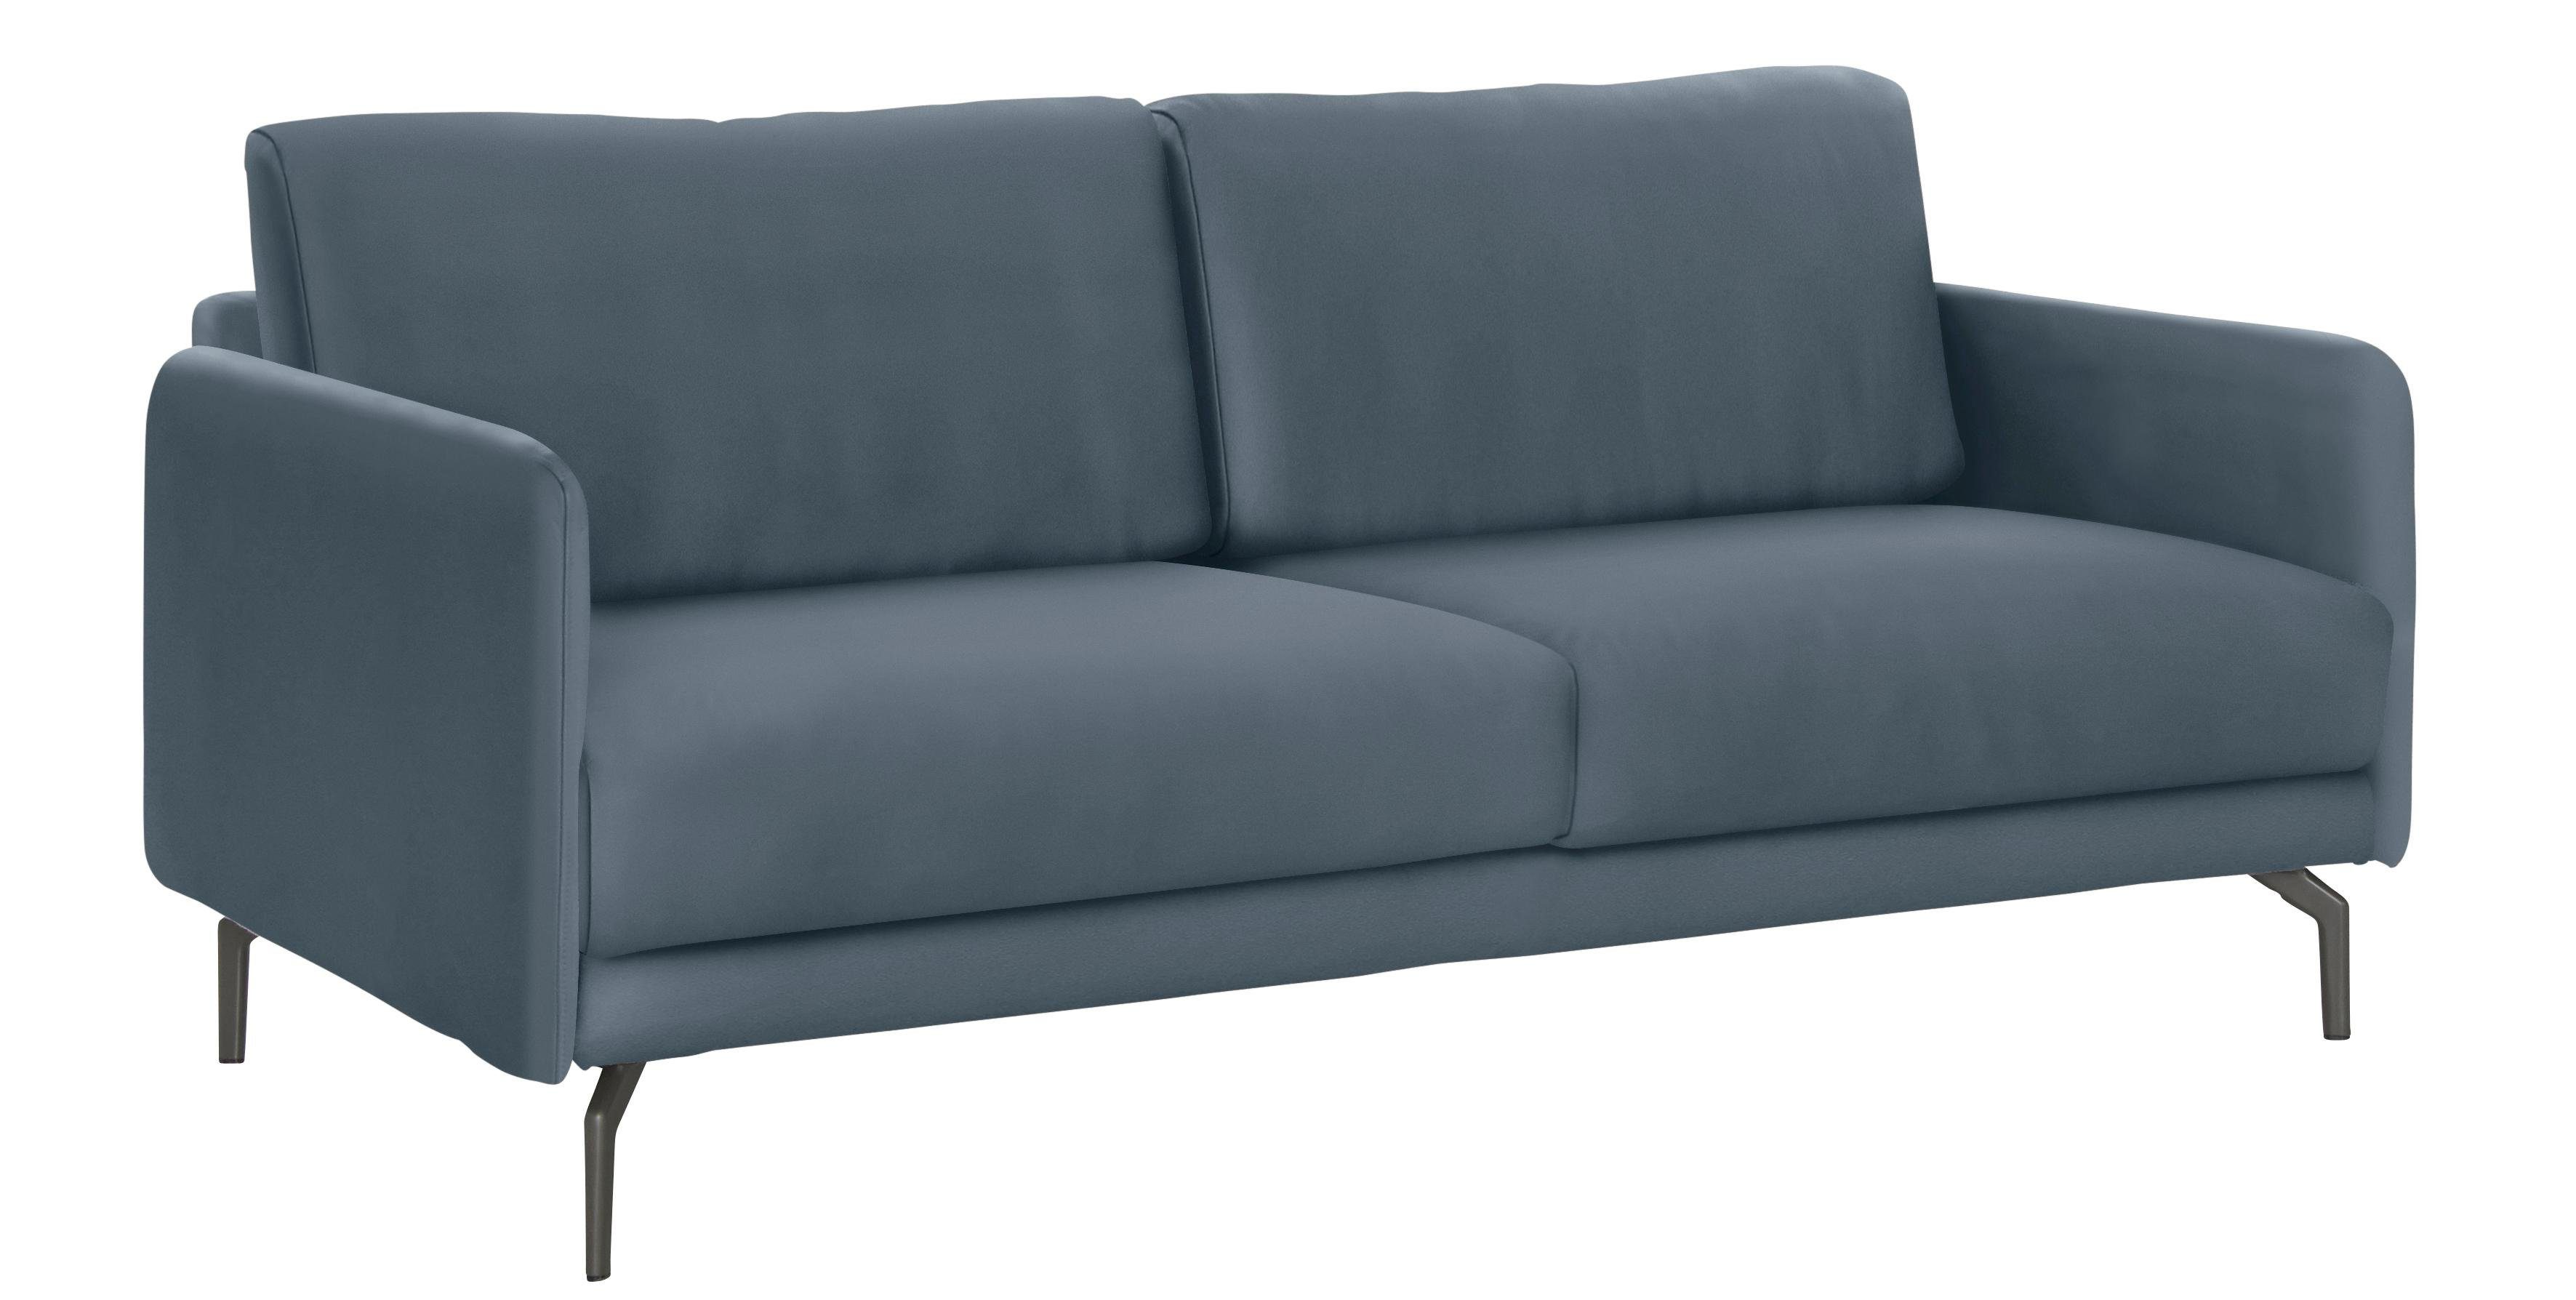 cm, sofa Umbragrau schmal, 3-Sitzer 190 Breite hülsta sehr Armlehne Alugussfuß hs.450,